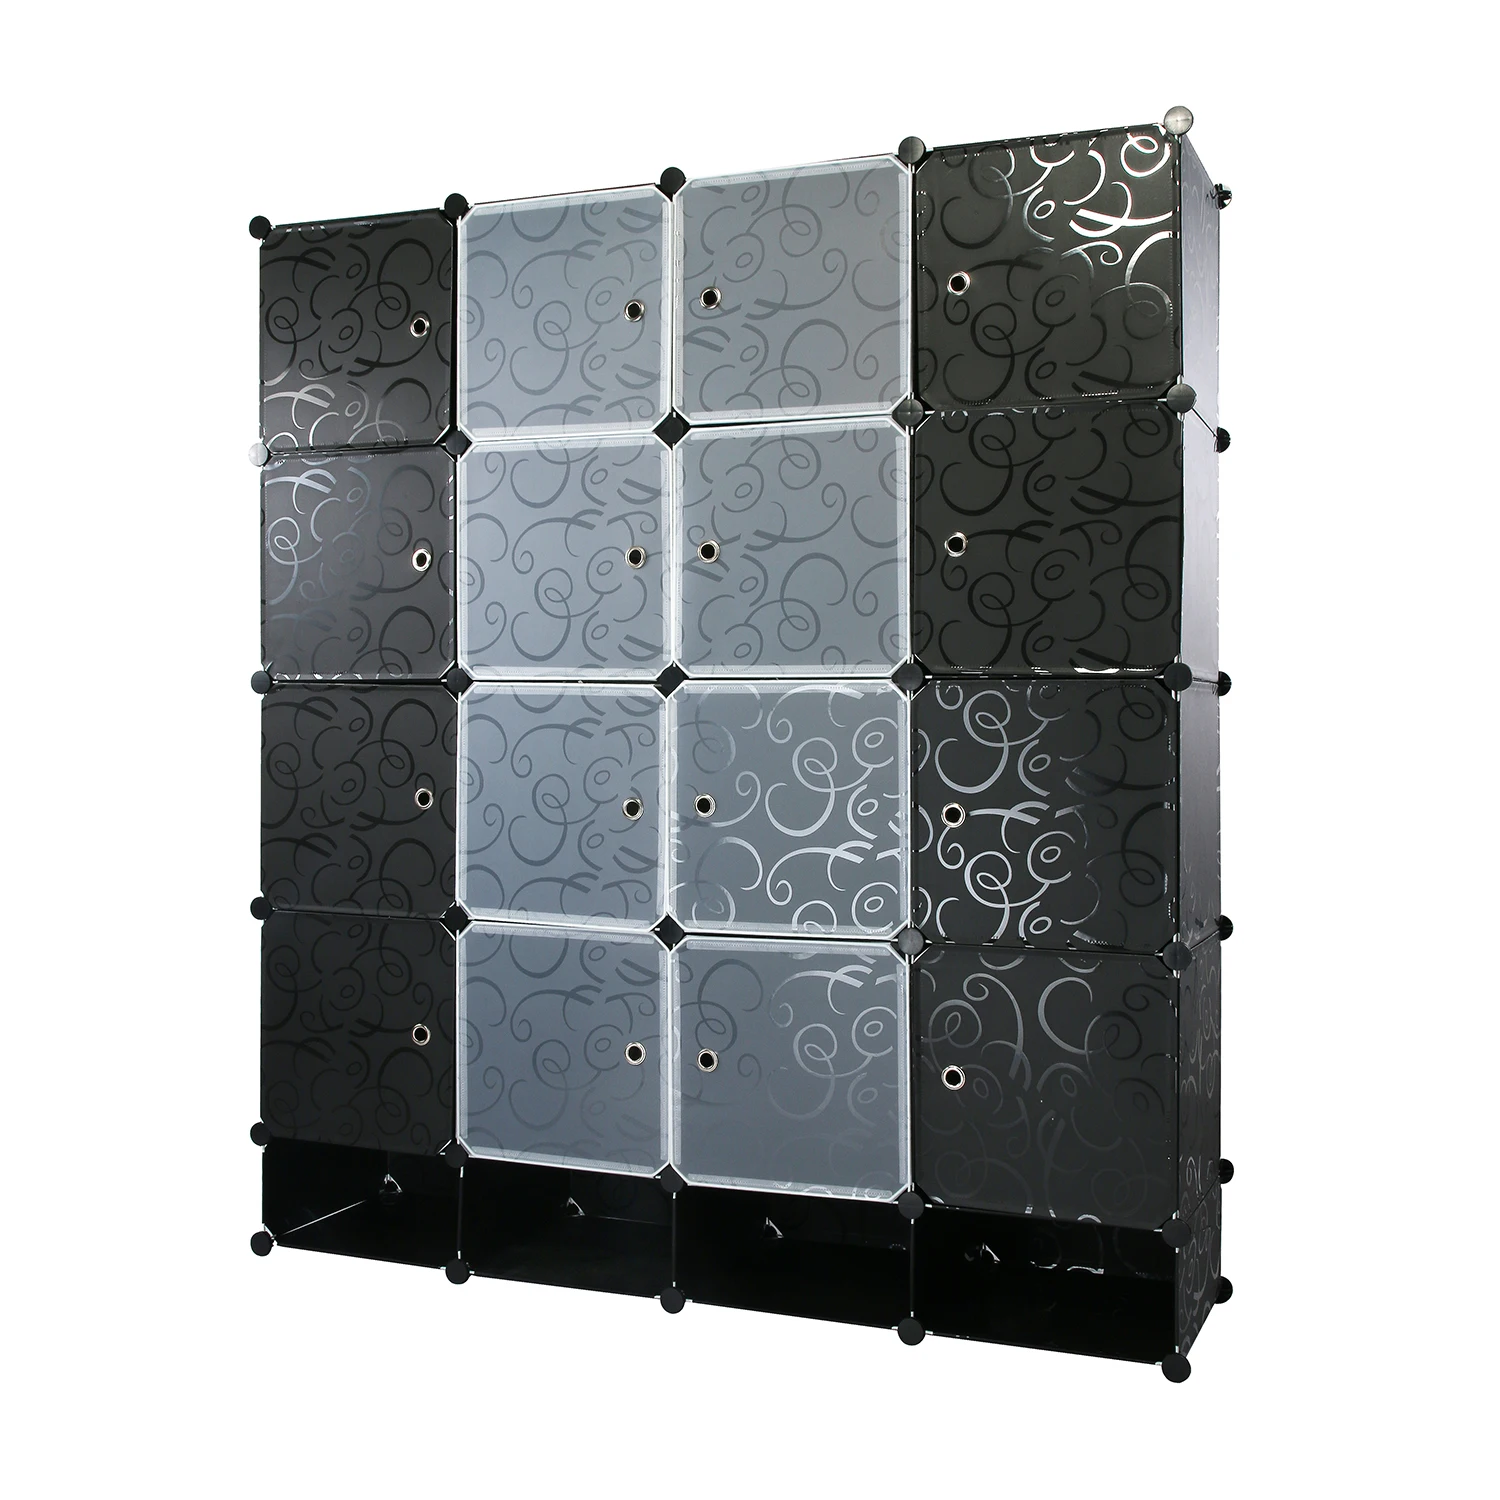 
Interlocking Popular Plastic PP Storage Cube Organizer Shelves Closet Decorative Closet 